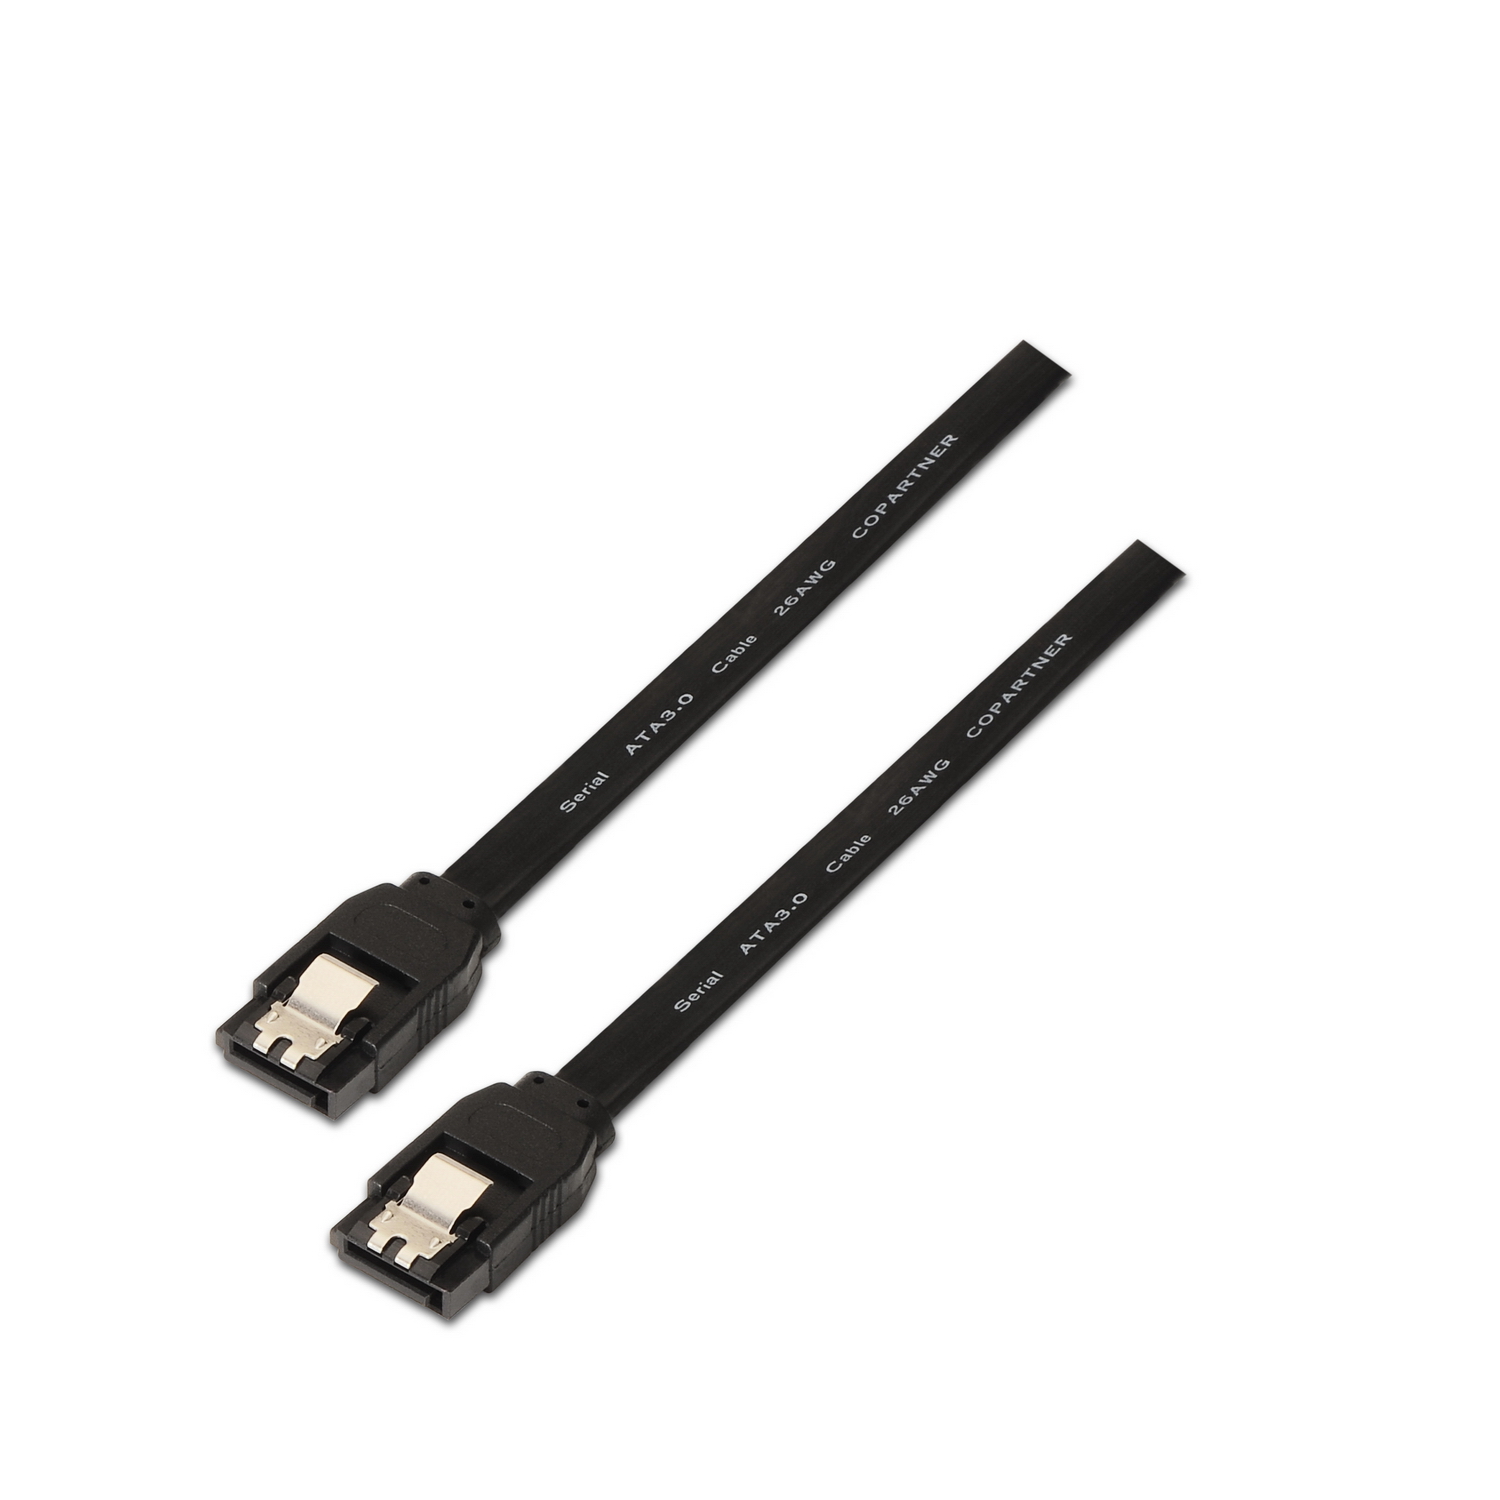 Cable SATA III datos 6G con anclajes, negro, 0.5 metros para disco duro SATA  I, II, III SSD - AISENS®